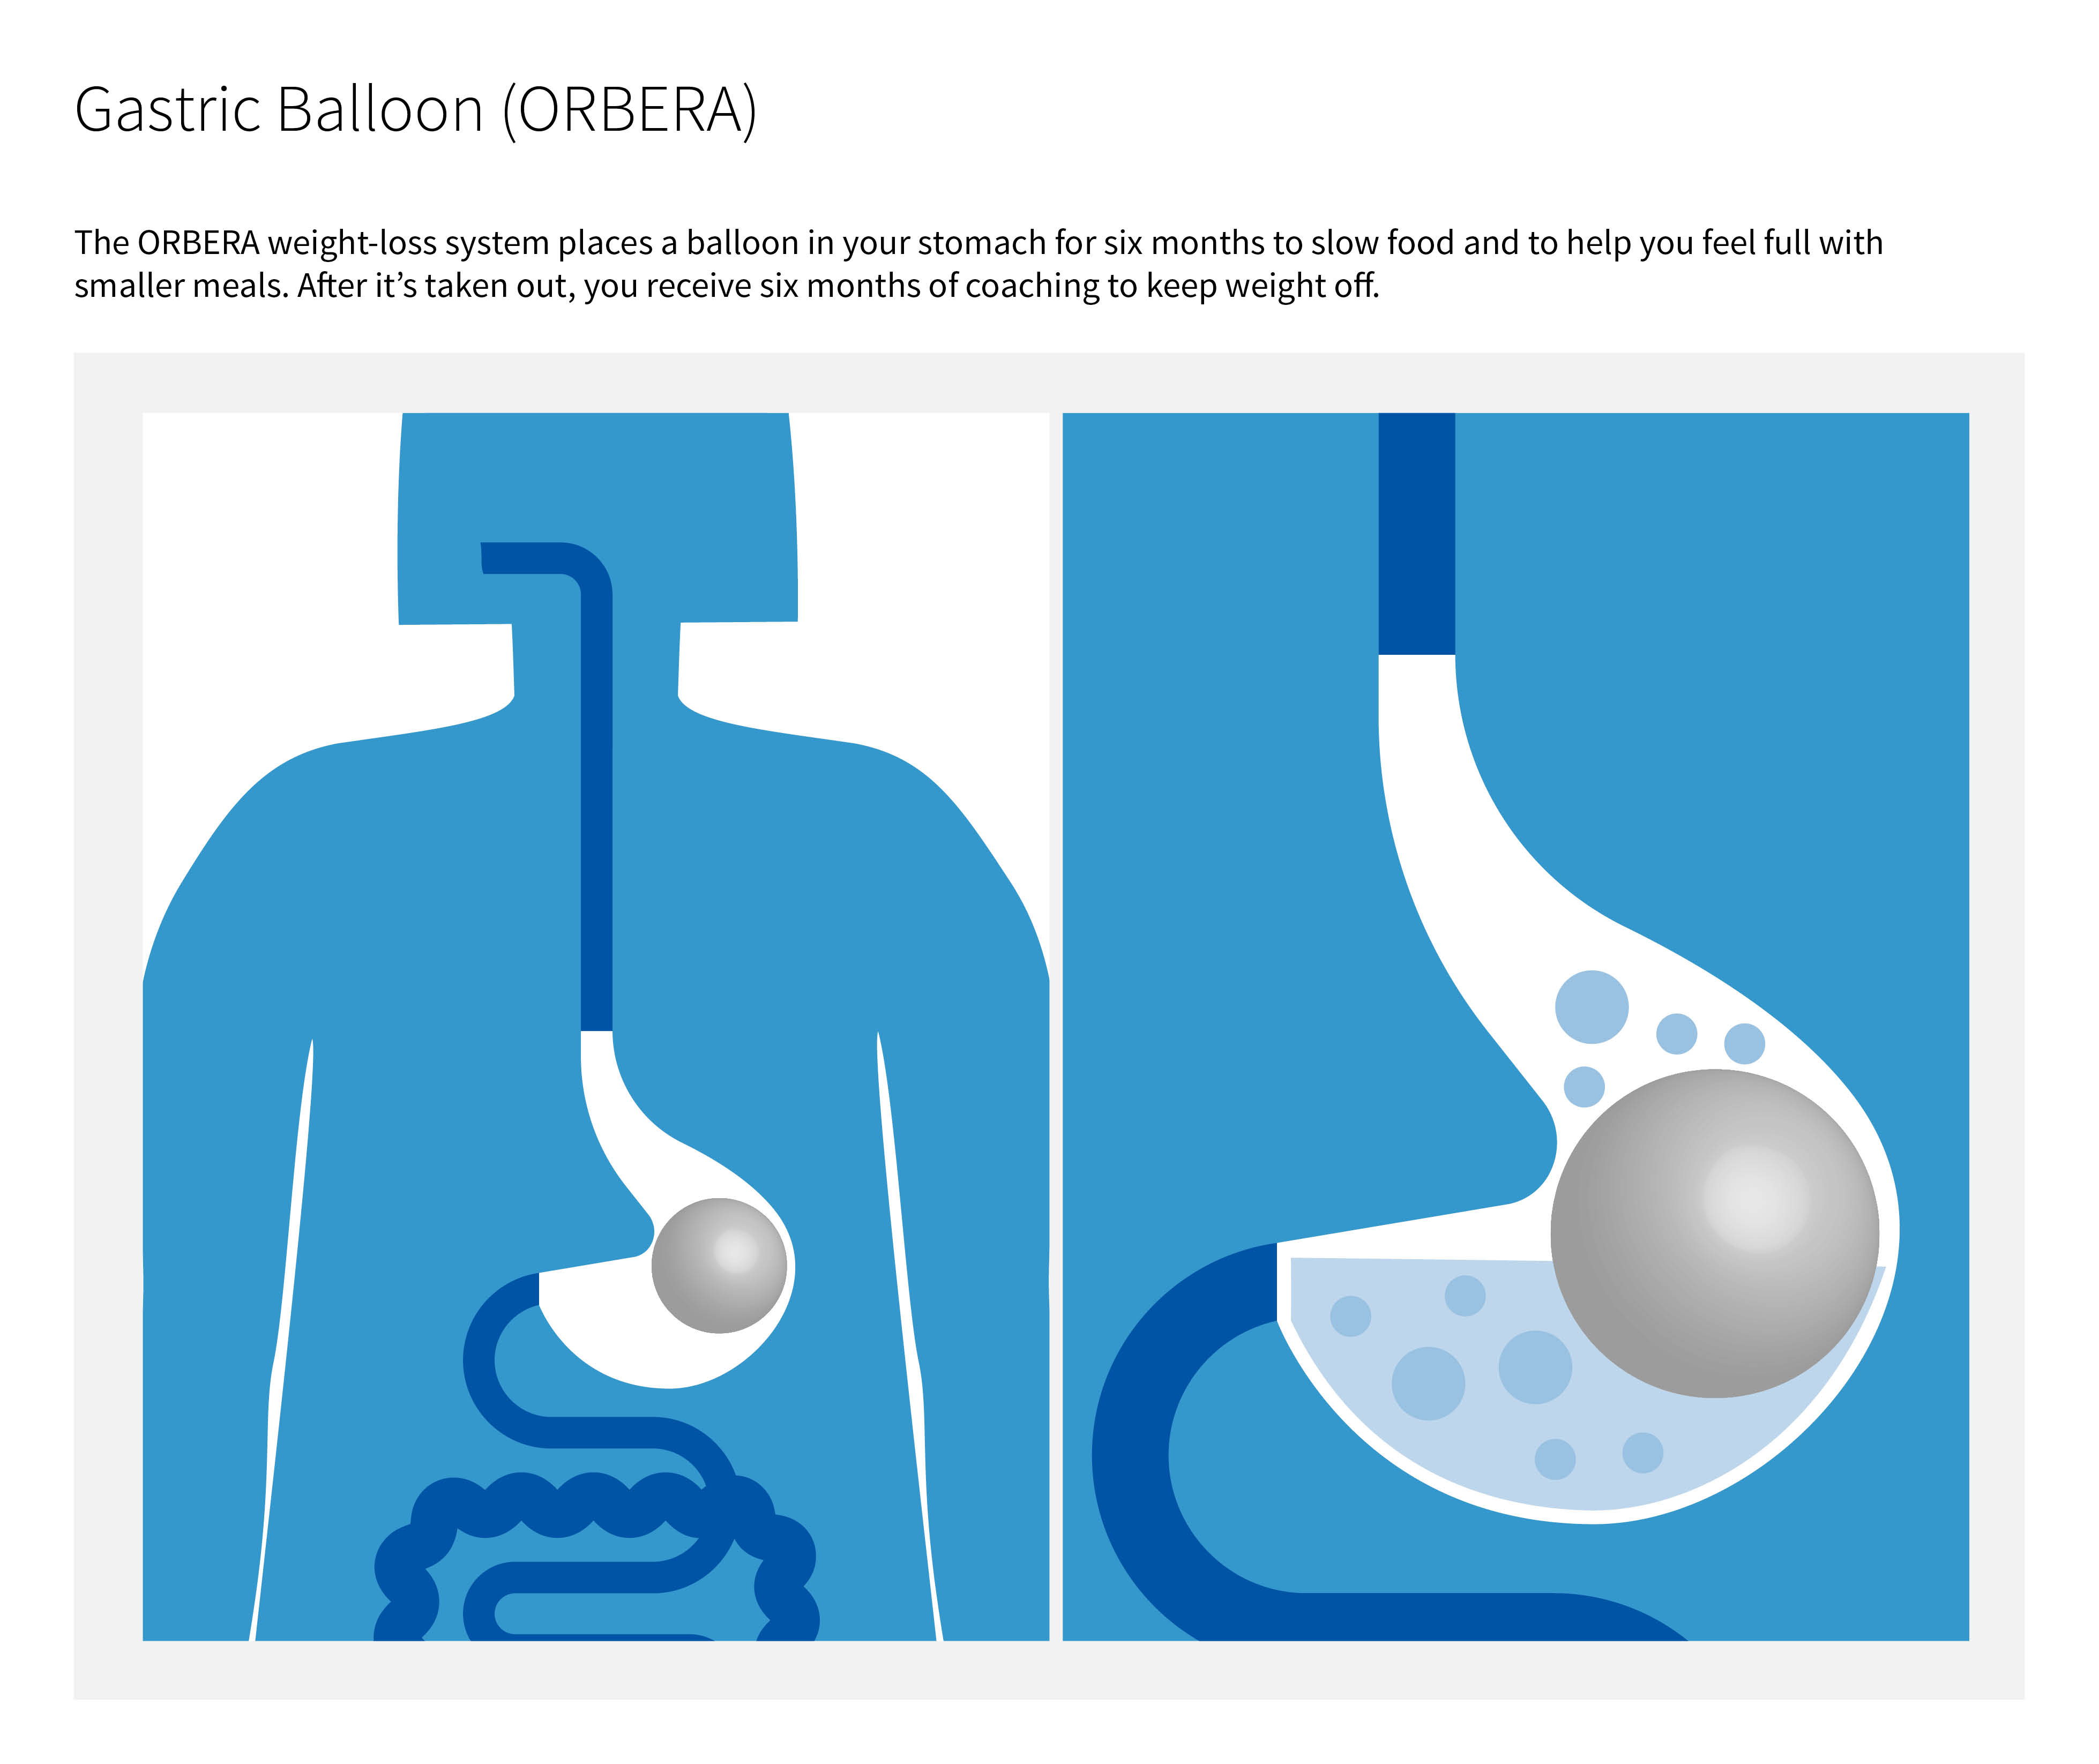 Illustration of gastric balloon full size